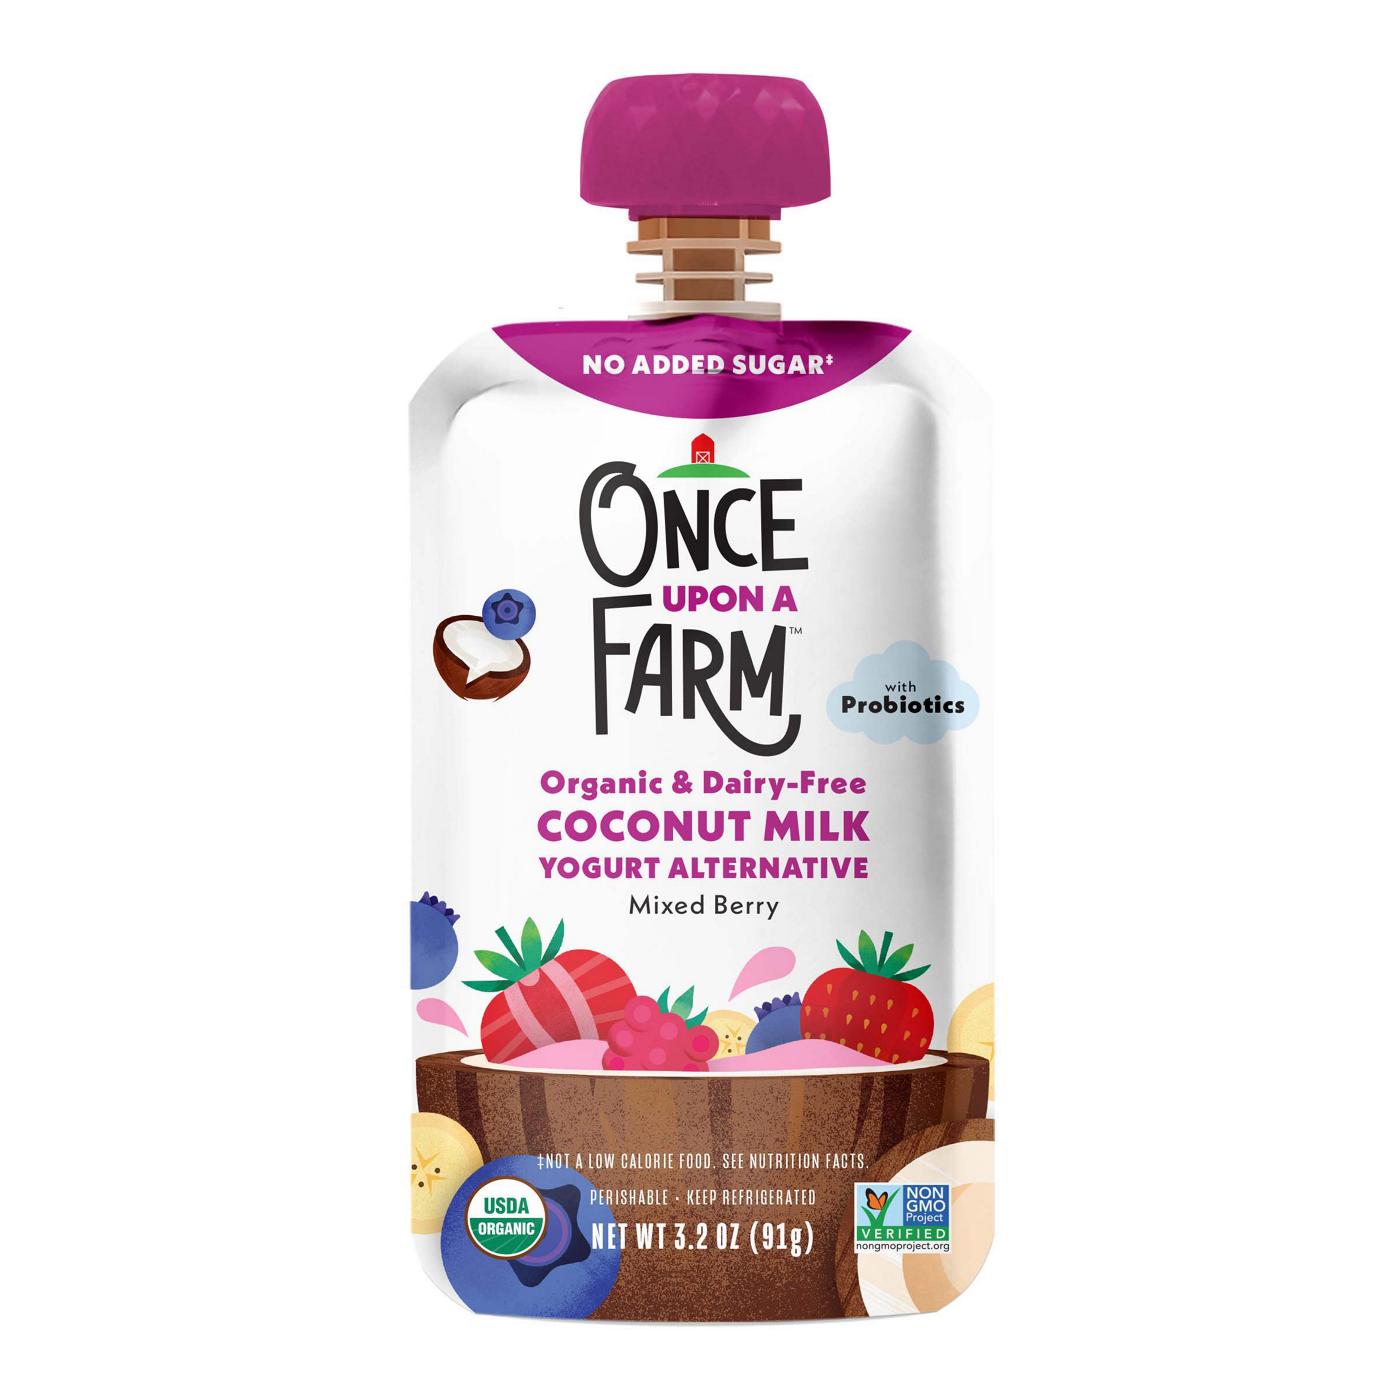 Once Upon a Farm Coconut Milk Yogurt Alternative - Mixed Berry; image 1 of 2